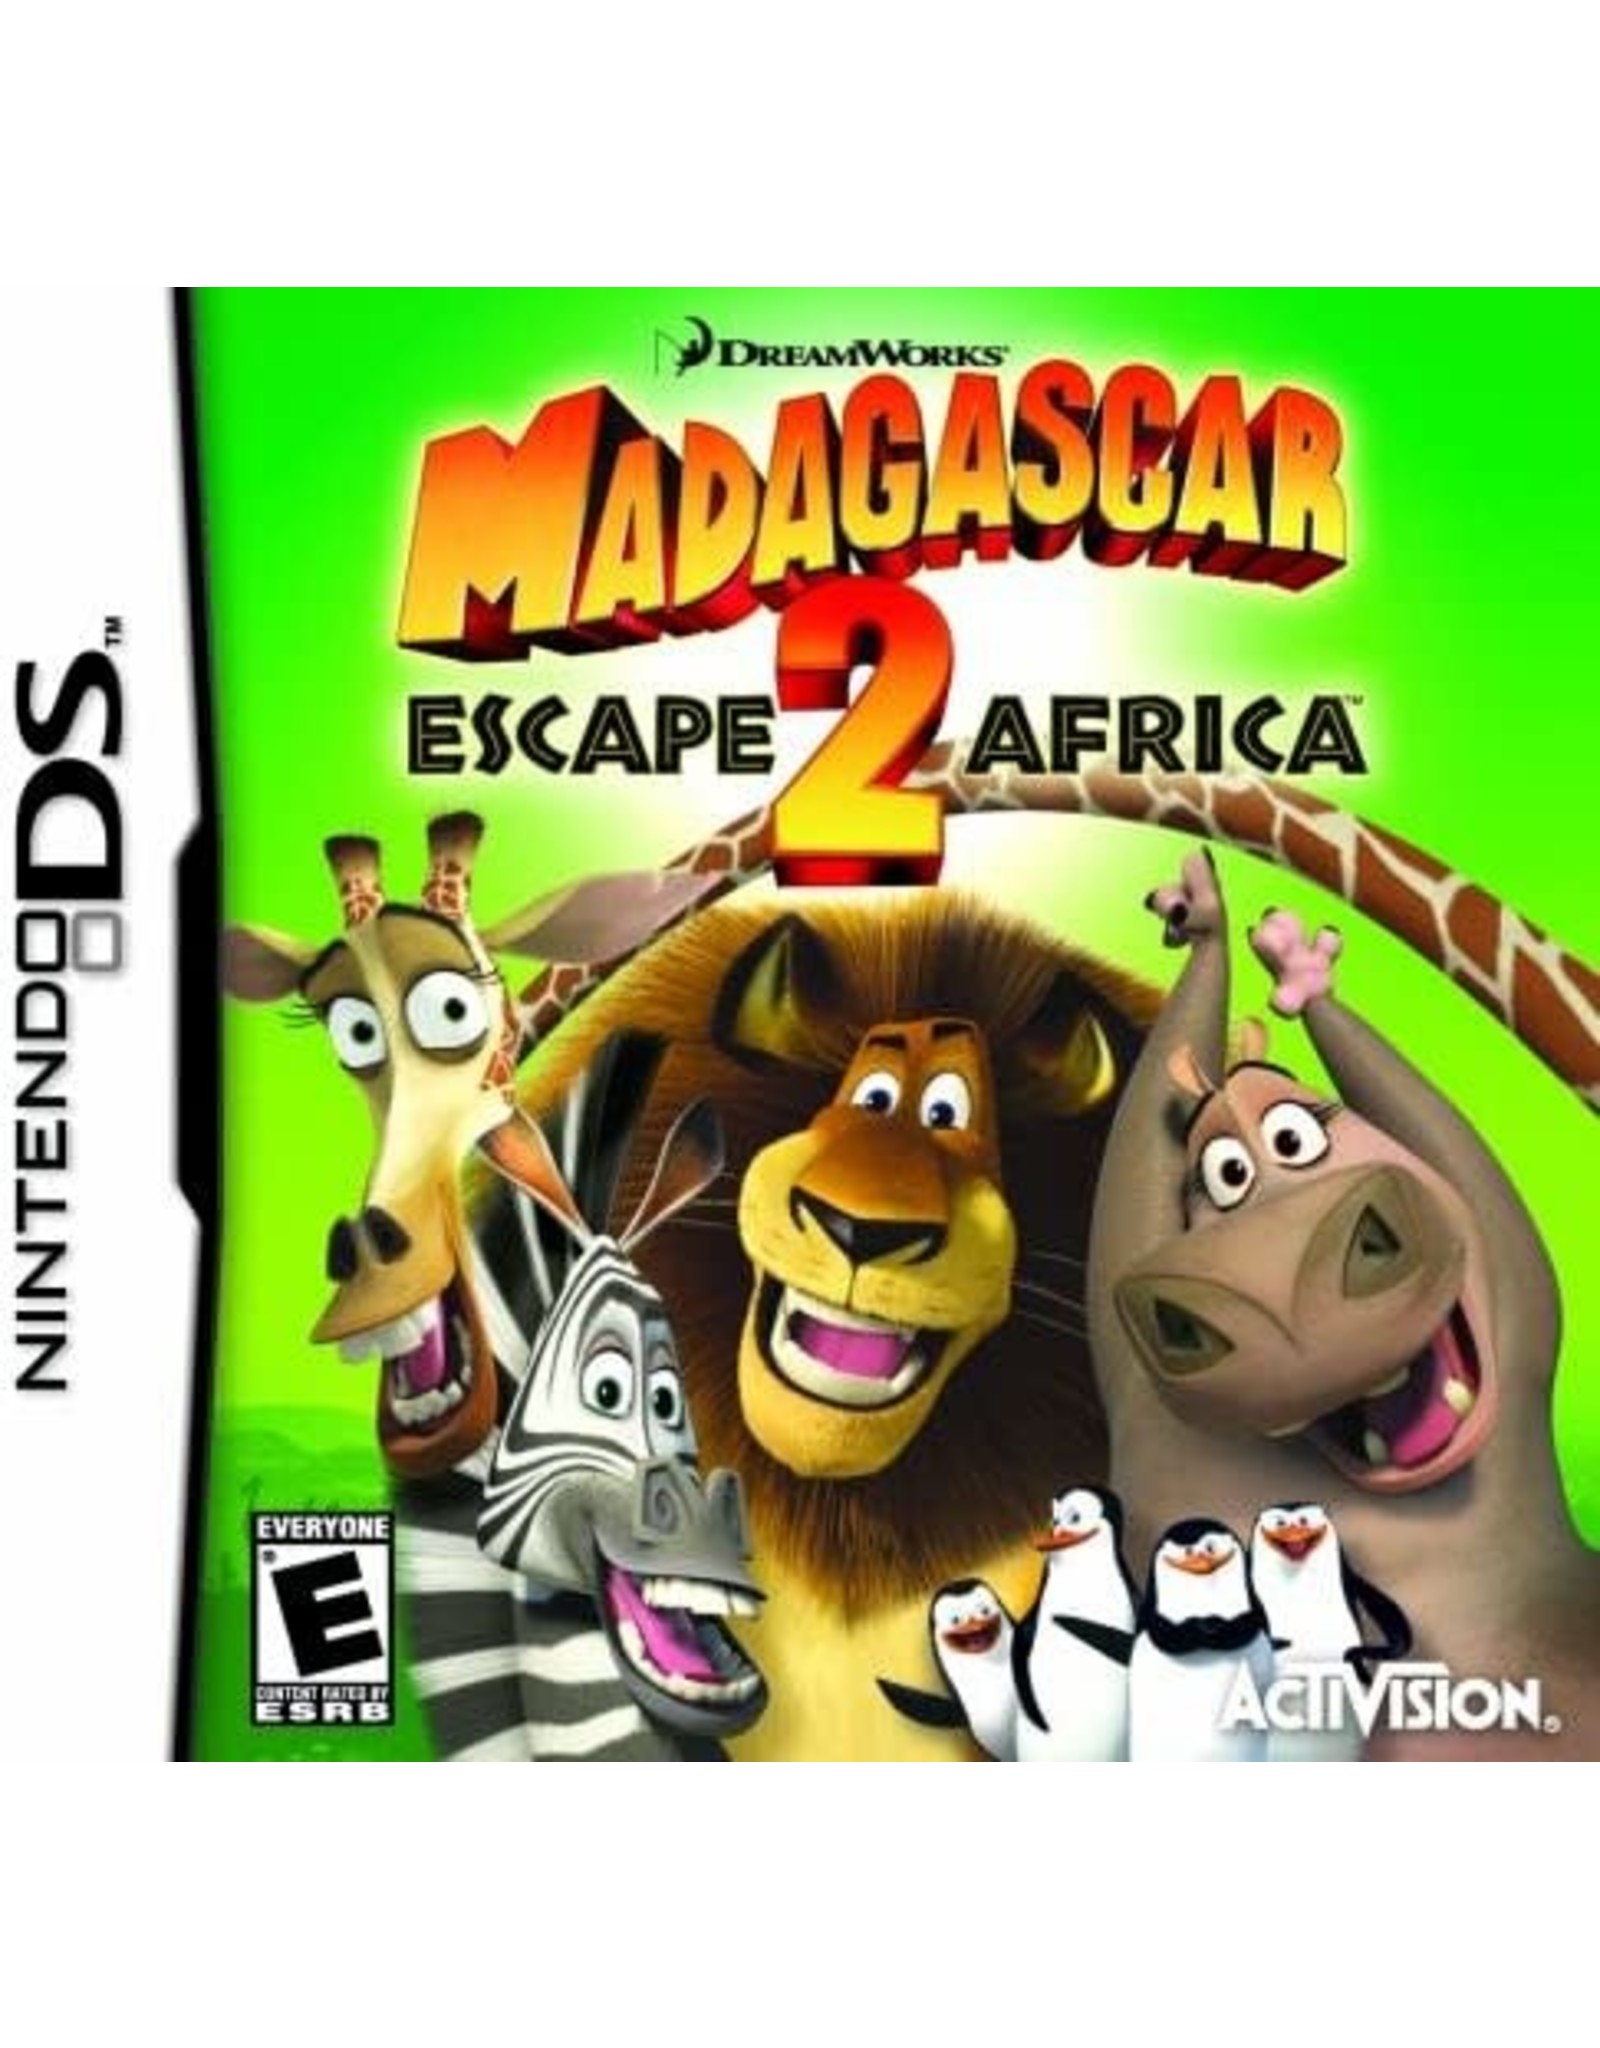 Nintendo DS Madagascar Escape 2 Africa (Cart Only)